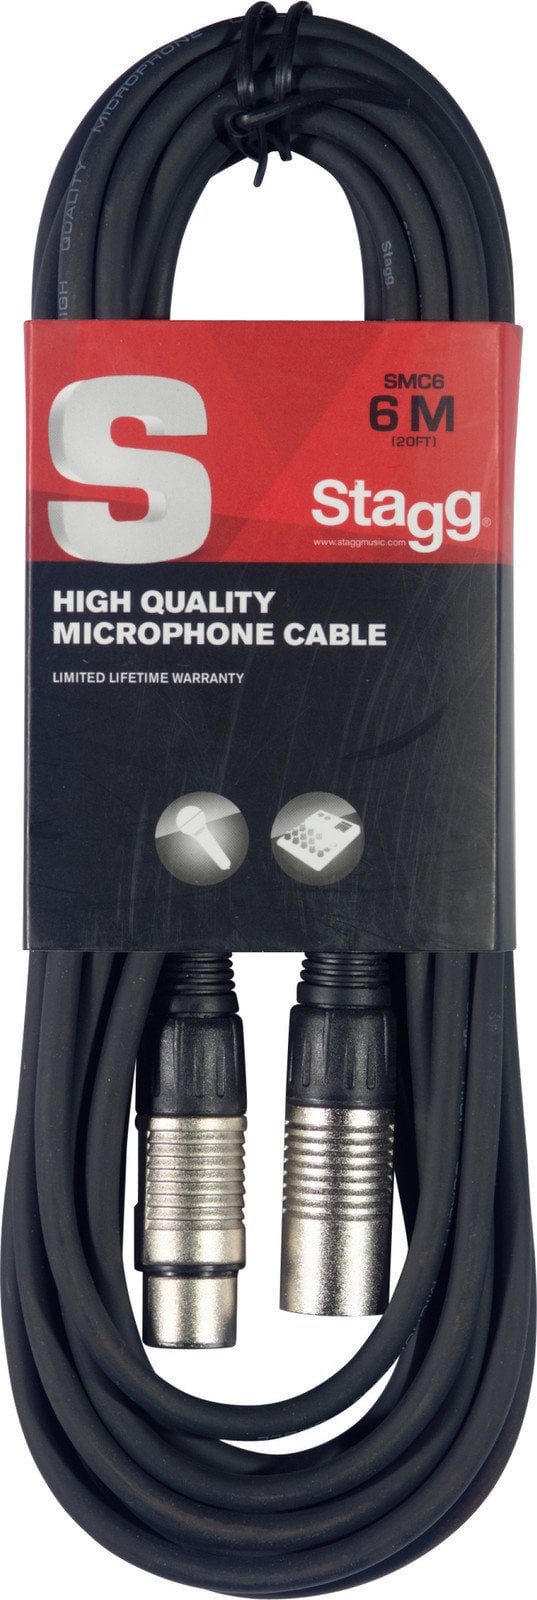 Cablu complet pentru microfoane Stagg SMC6 Negru 6 m